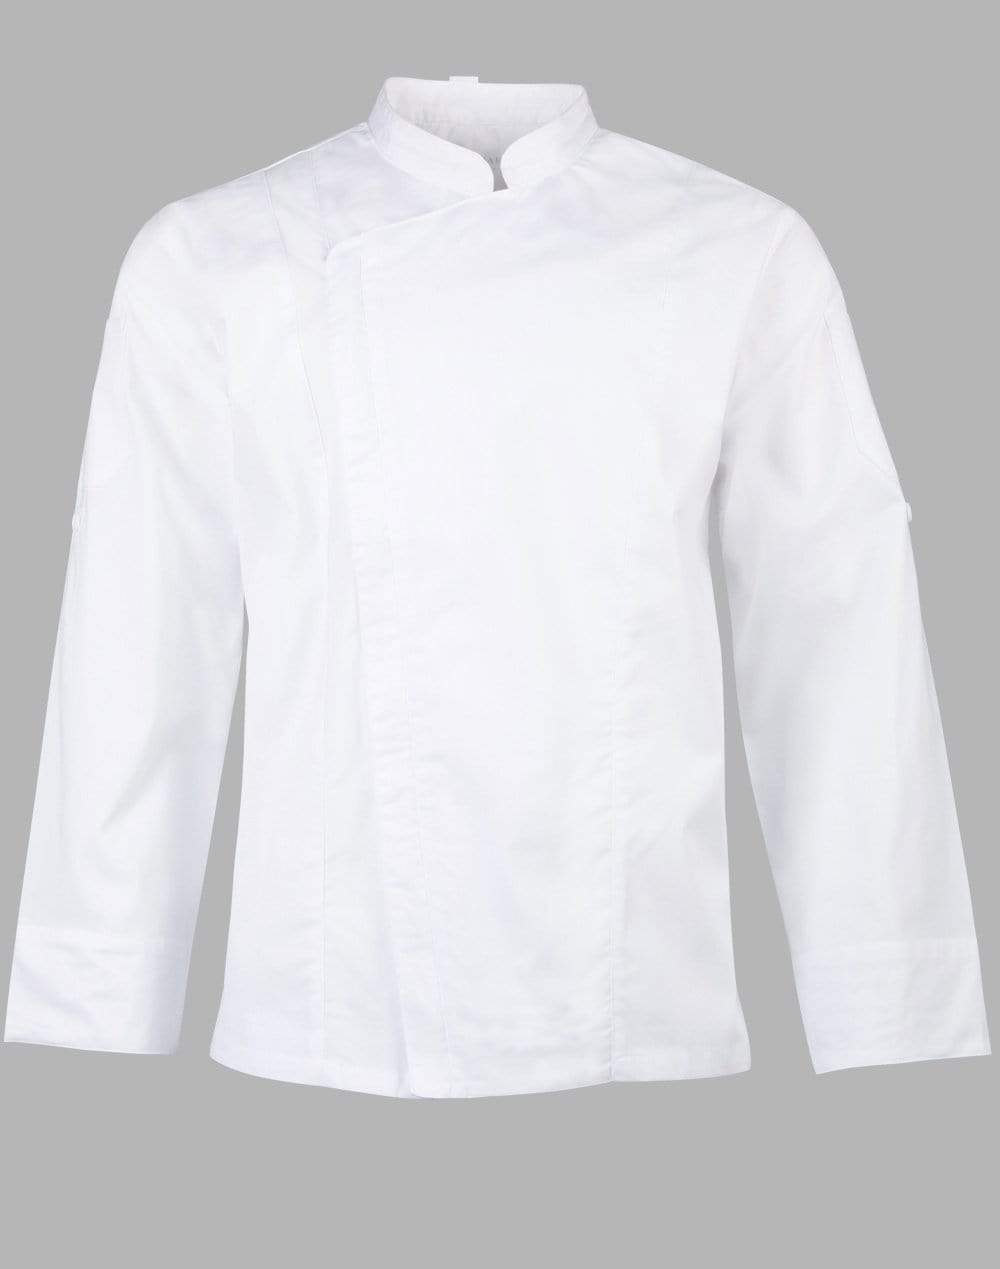 Winning Spirit Men's Functional Chef Jackets Cj03 Hospitality & Chefwear Winning Spirit White XS 